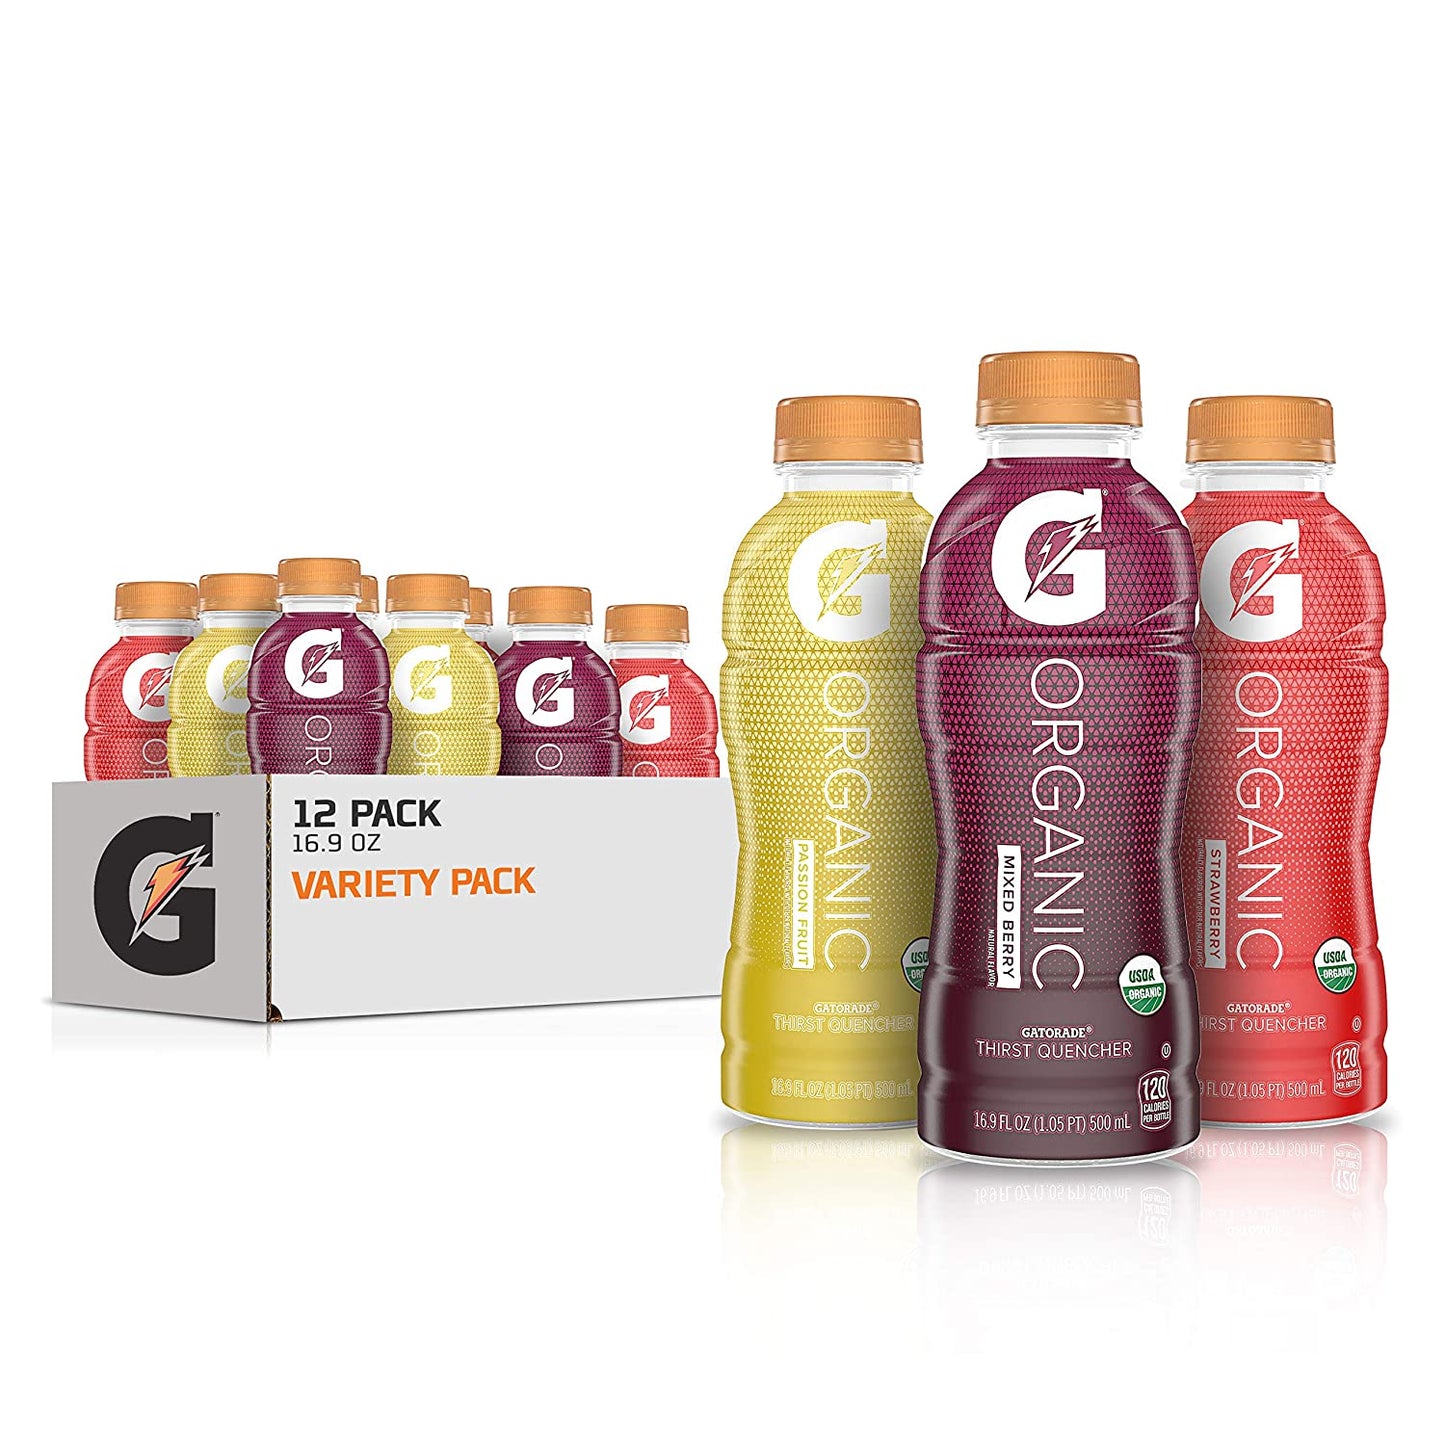 G Organic, 3 Flavor Variety Pack, Gatorade Sports Drink, Organic Hydration, USDA Certified Organic, 16.9 fl oz Bottles (Pack of 12)